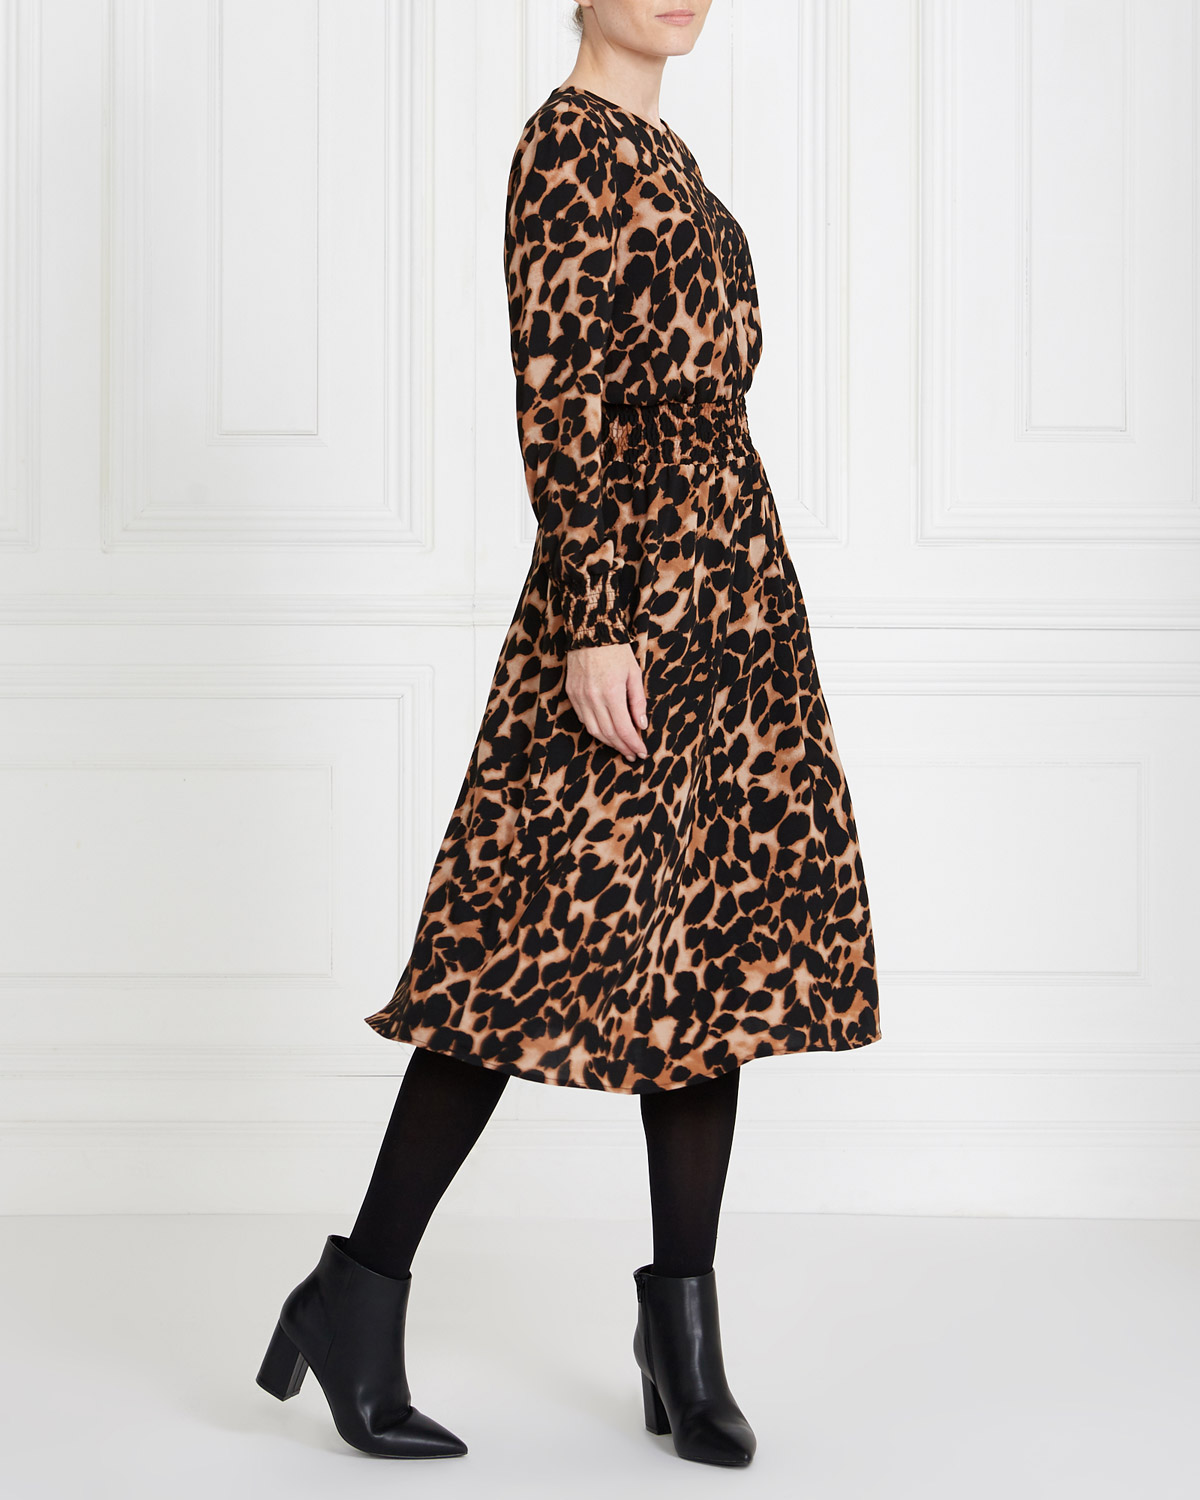 dunnes stores leopard print dress